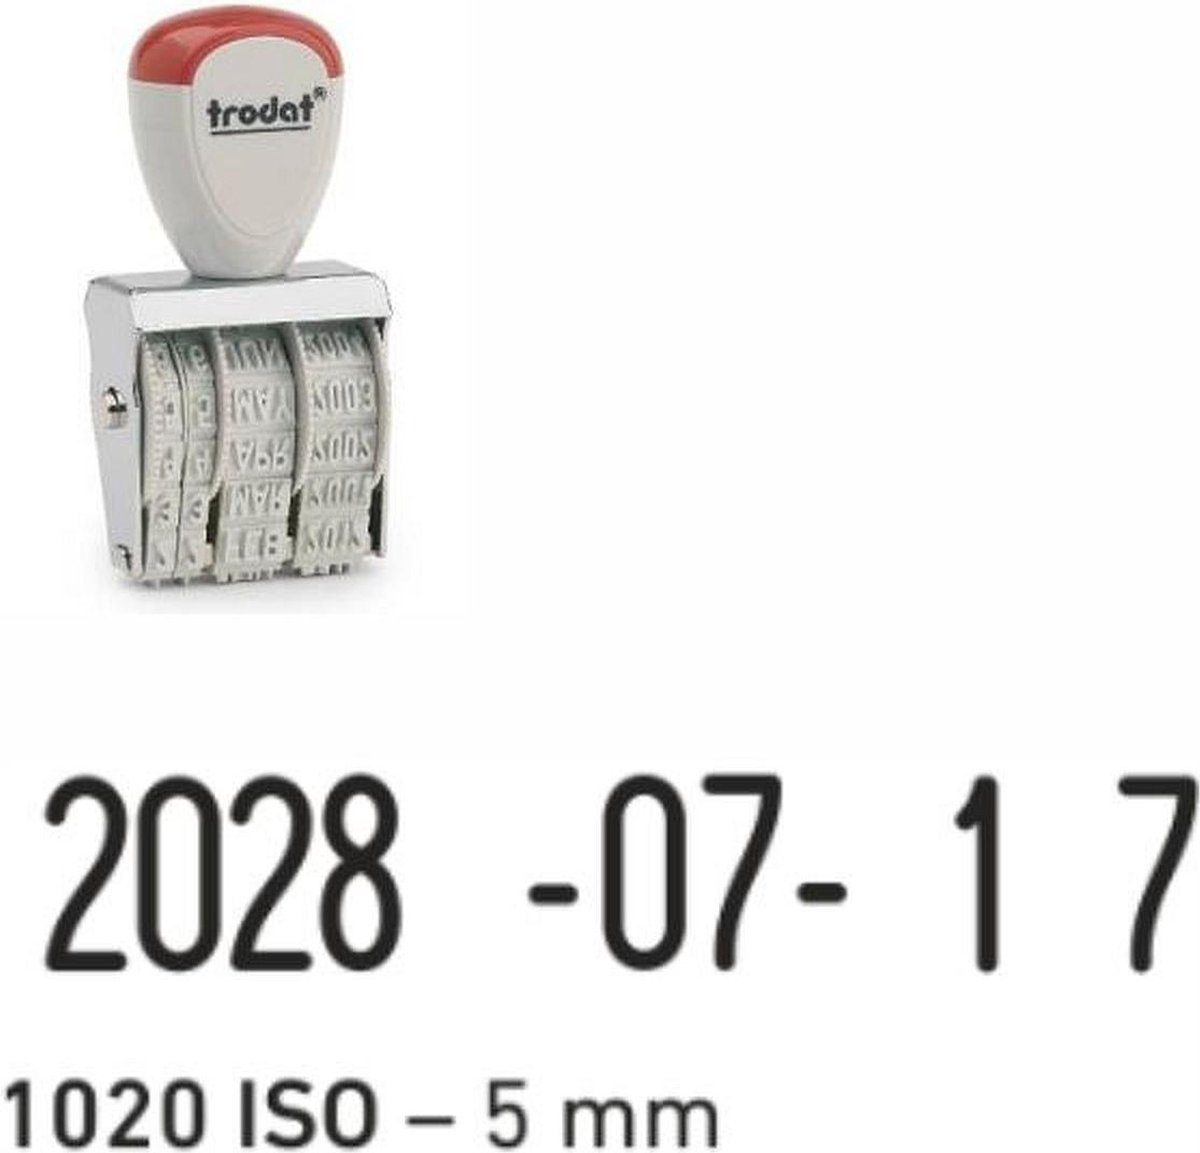 Trodat Classic datumstempel 1020 5 mm ISO - Trodat